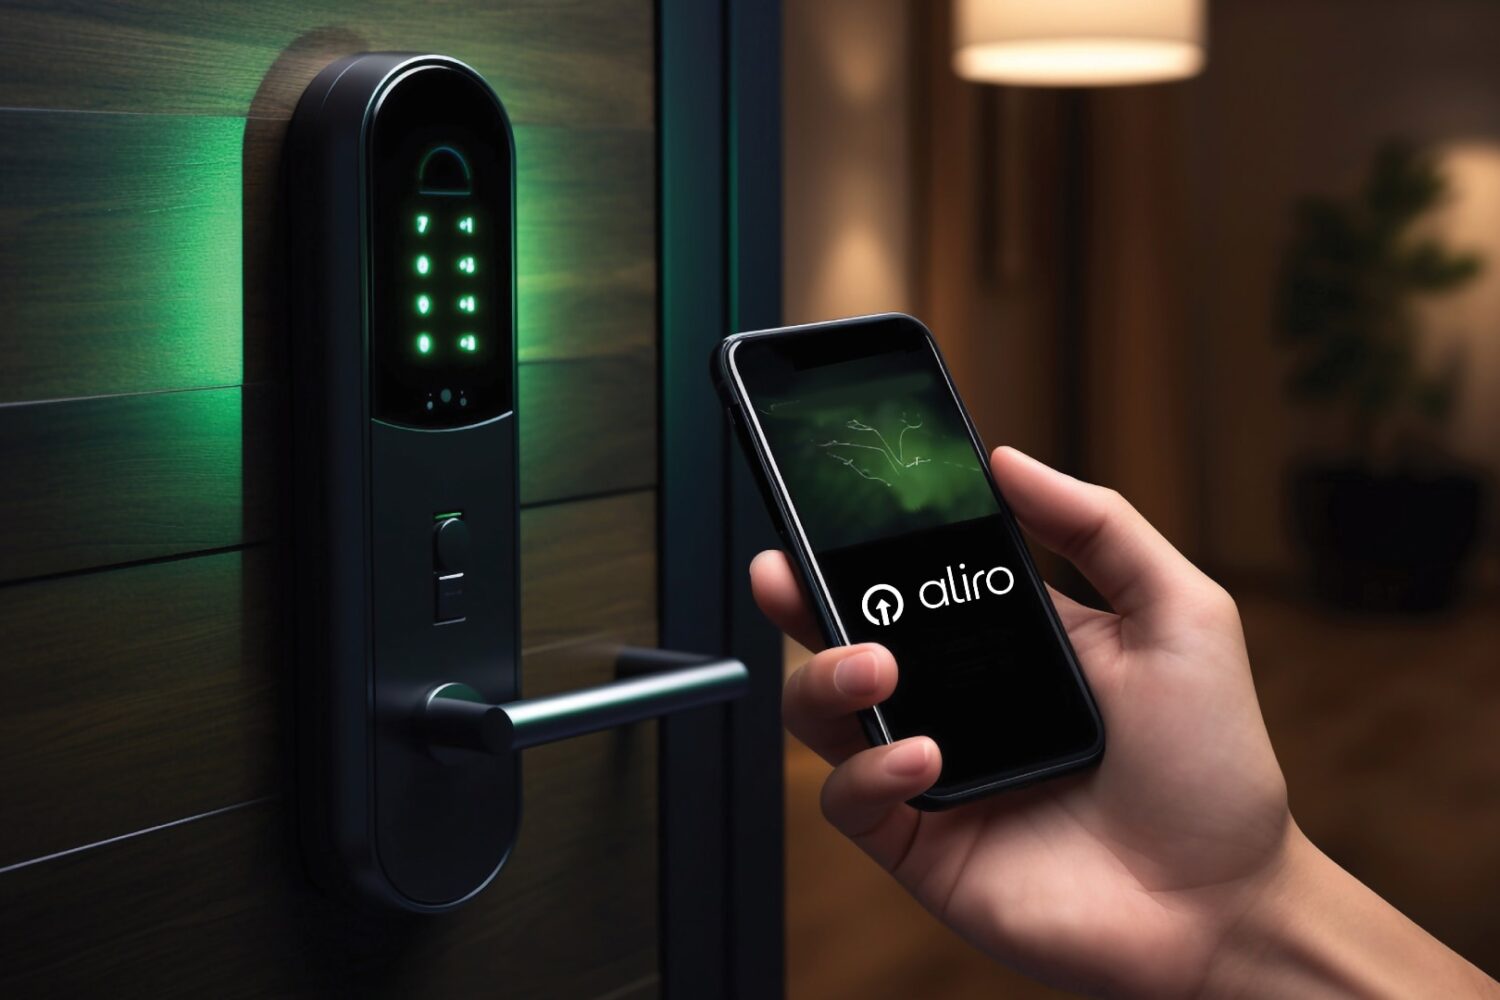 Smartphone with Aliro logo on the display, held near a smart door lock